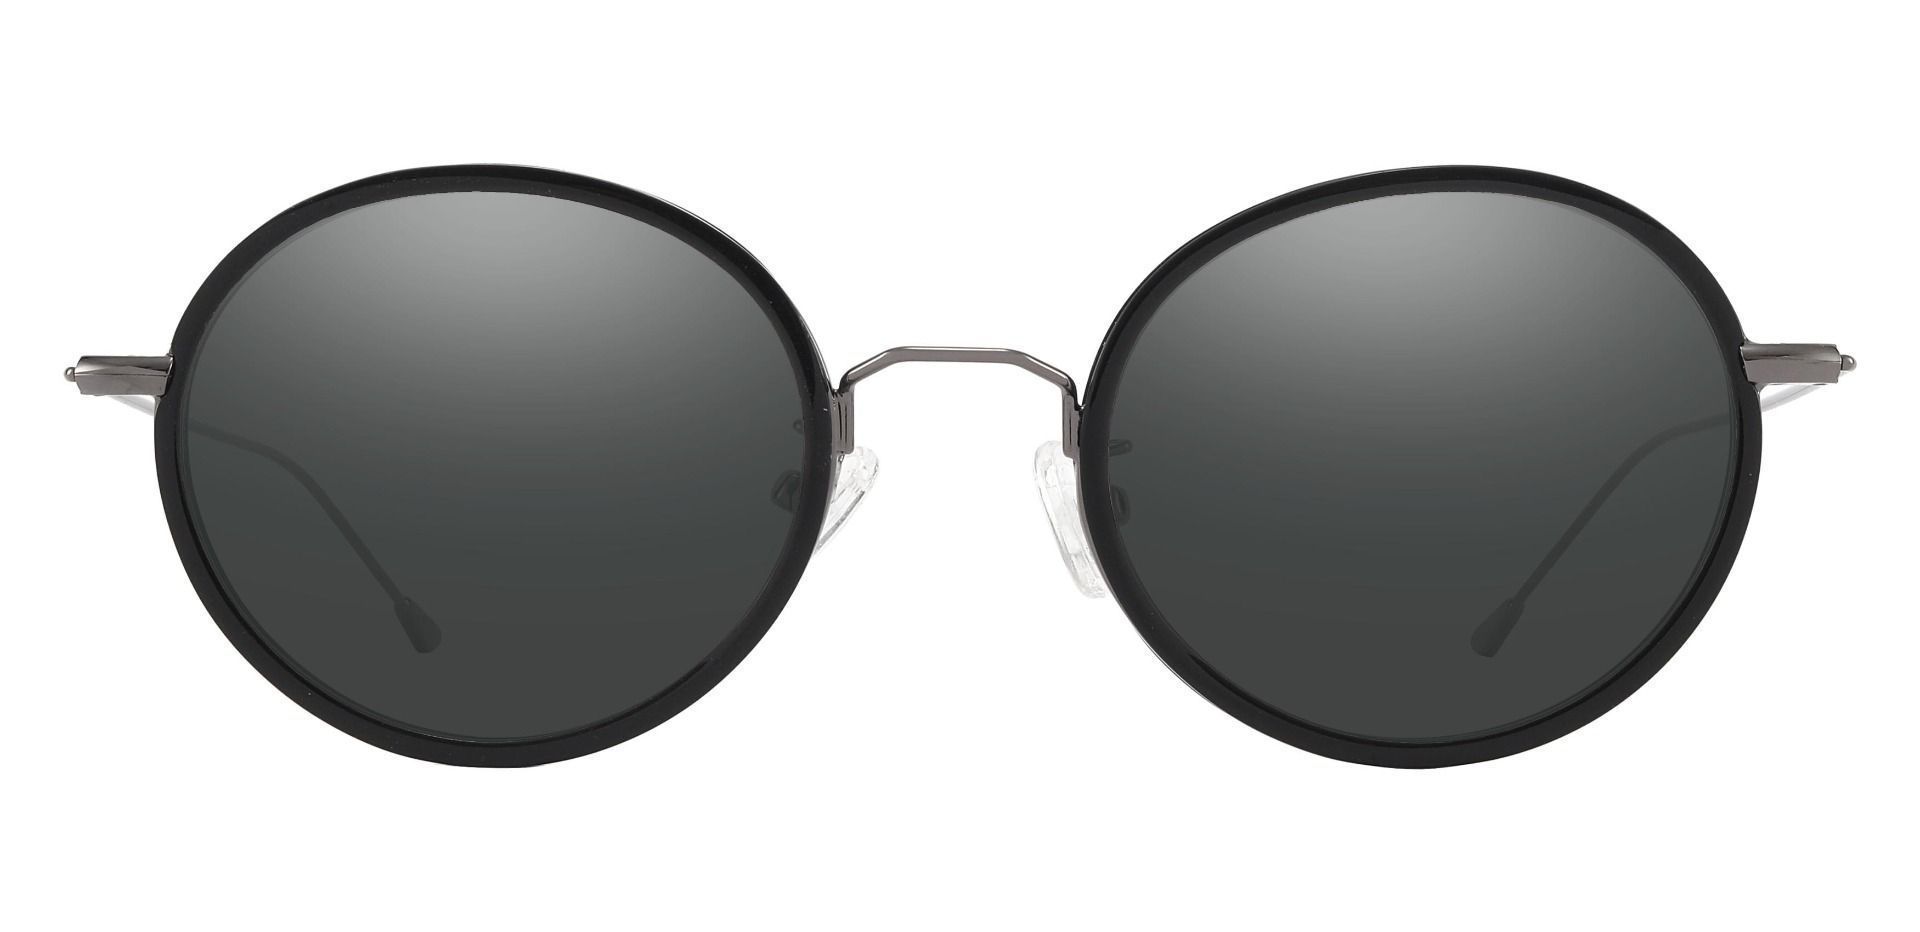 Malverne Oval Reading Sunglasses - Black Frame With Gray Lenses